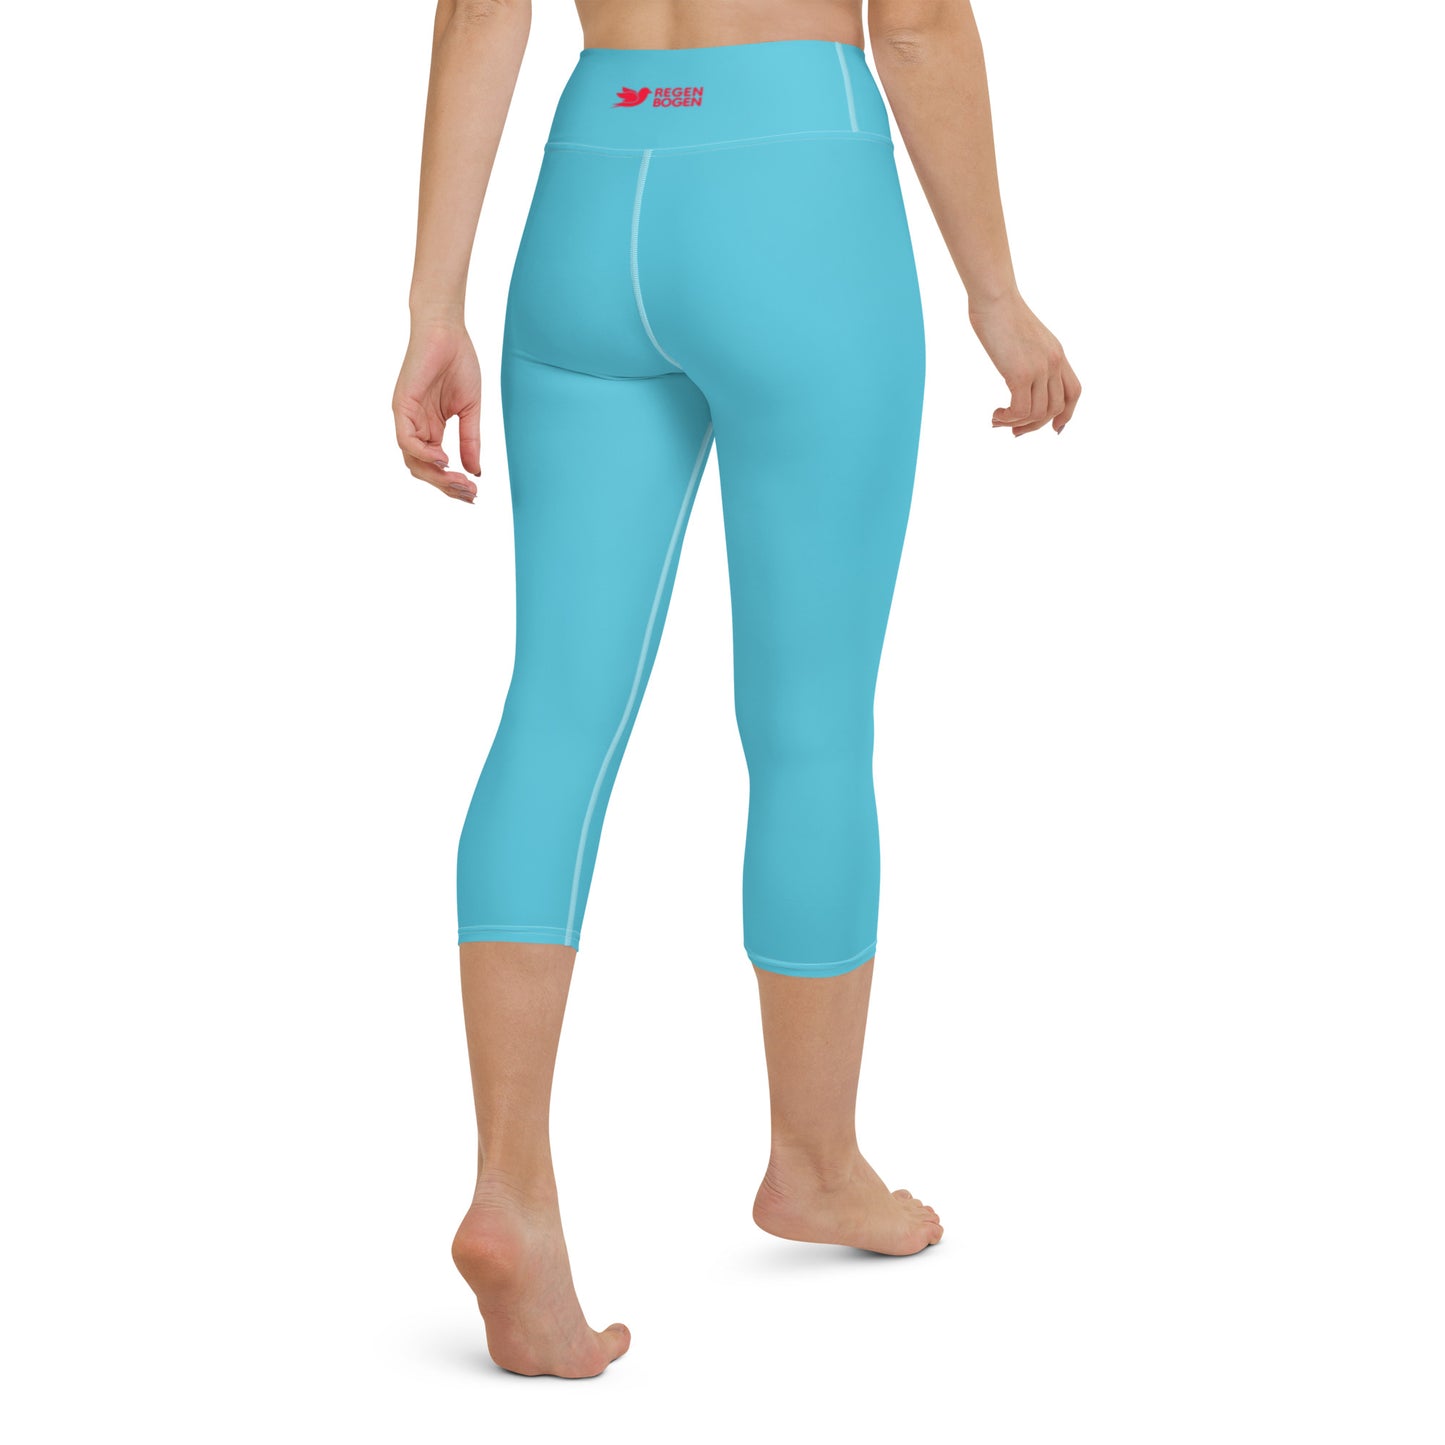 Fiori Solid Color Capri High Waist Yoga Leggings / Pants with Inside Pocket